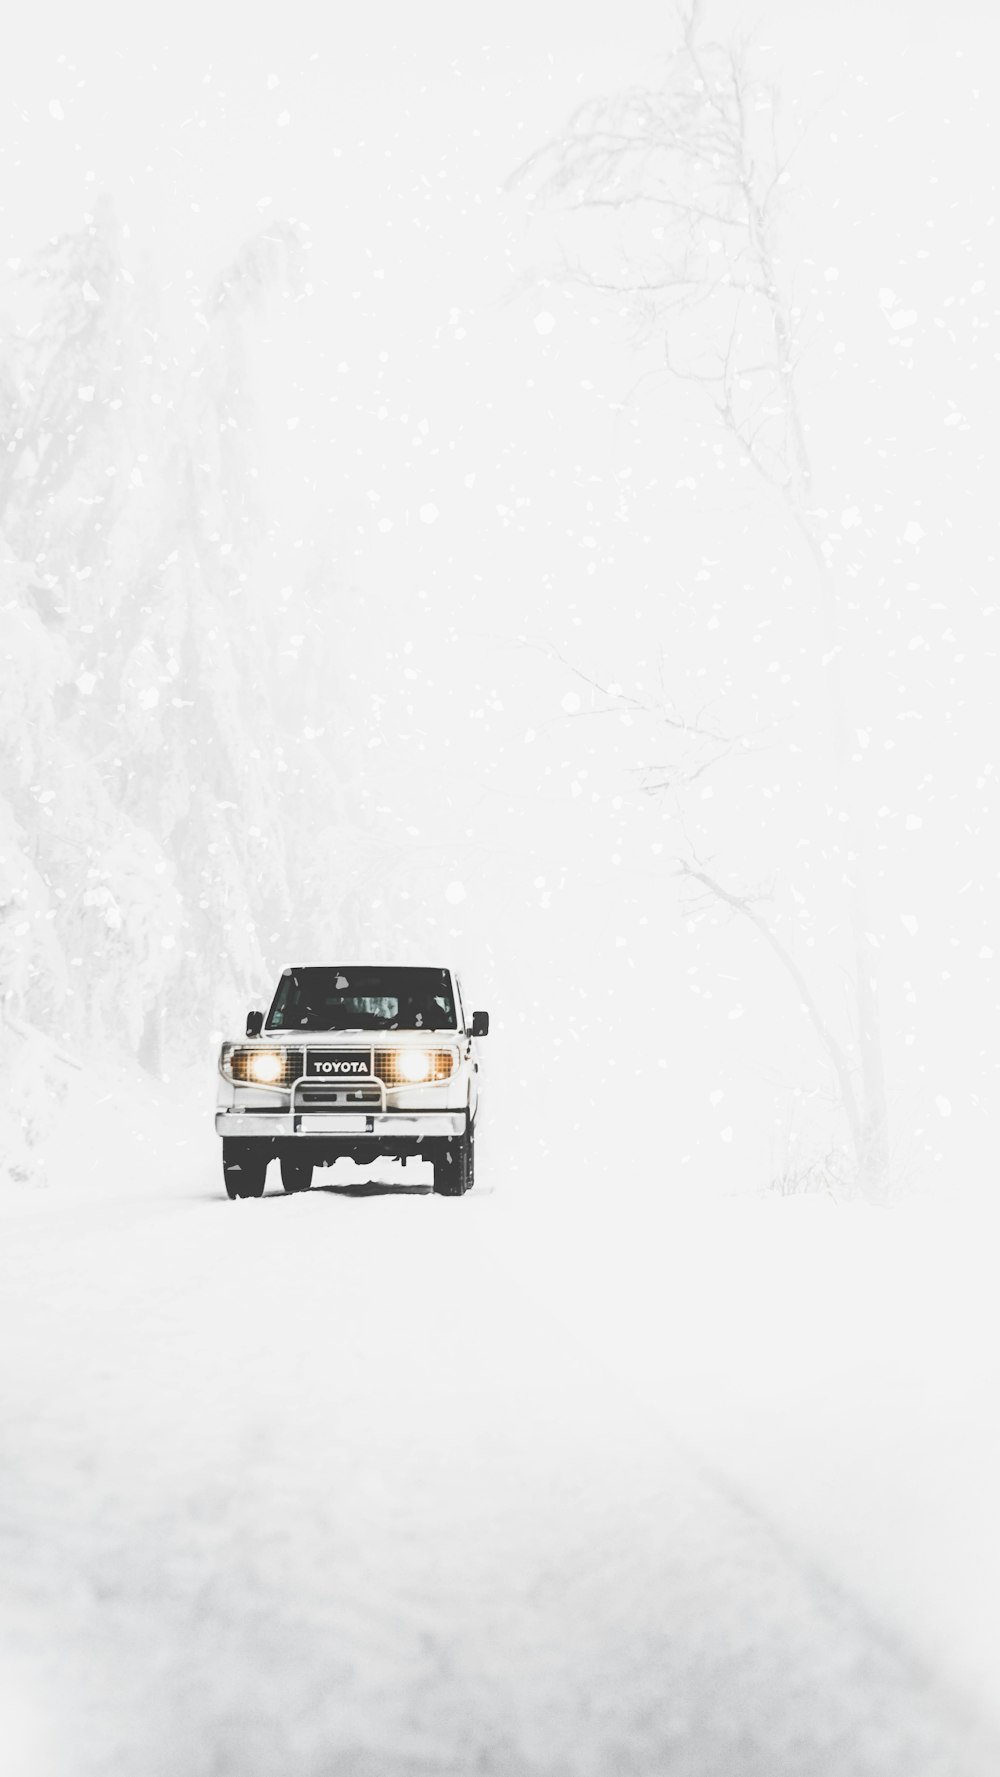 VUS Toyota recouvert de neige